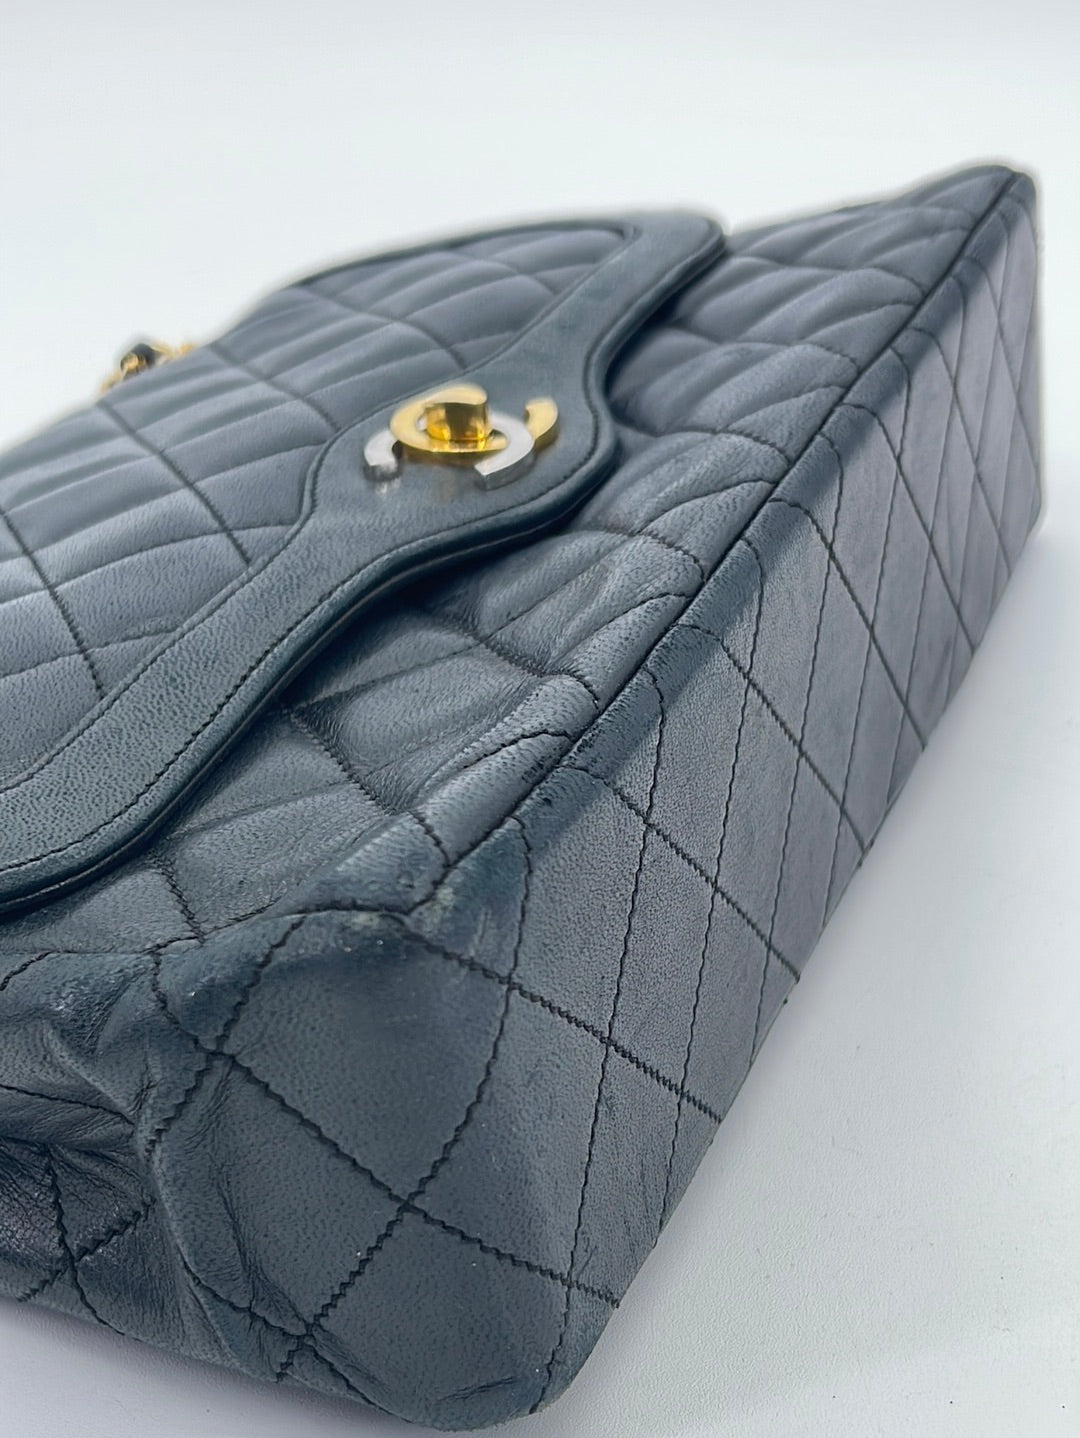 Vintage Chanel Classic Double Flap Shoulder Bag Small Black